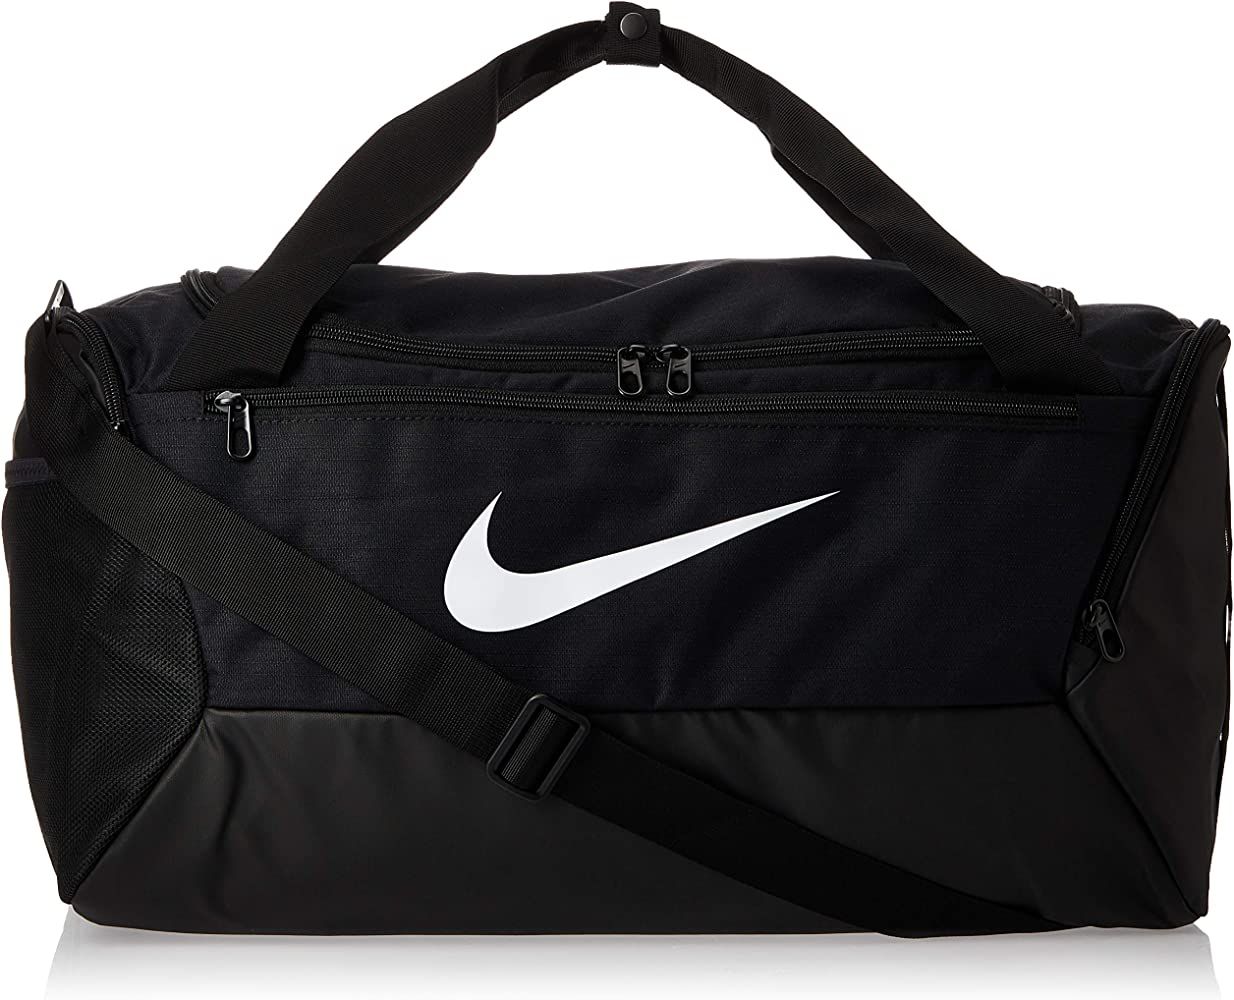 Nike Brasilia Small Duffel-9.0, Black/Black/White, One Size | Amazon (US)